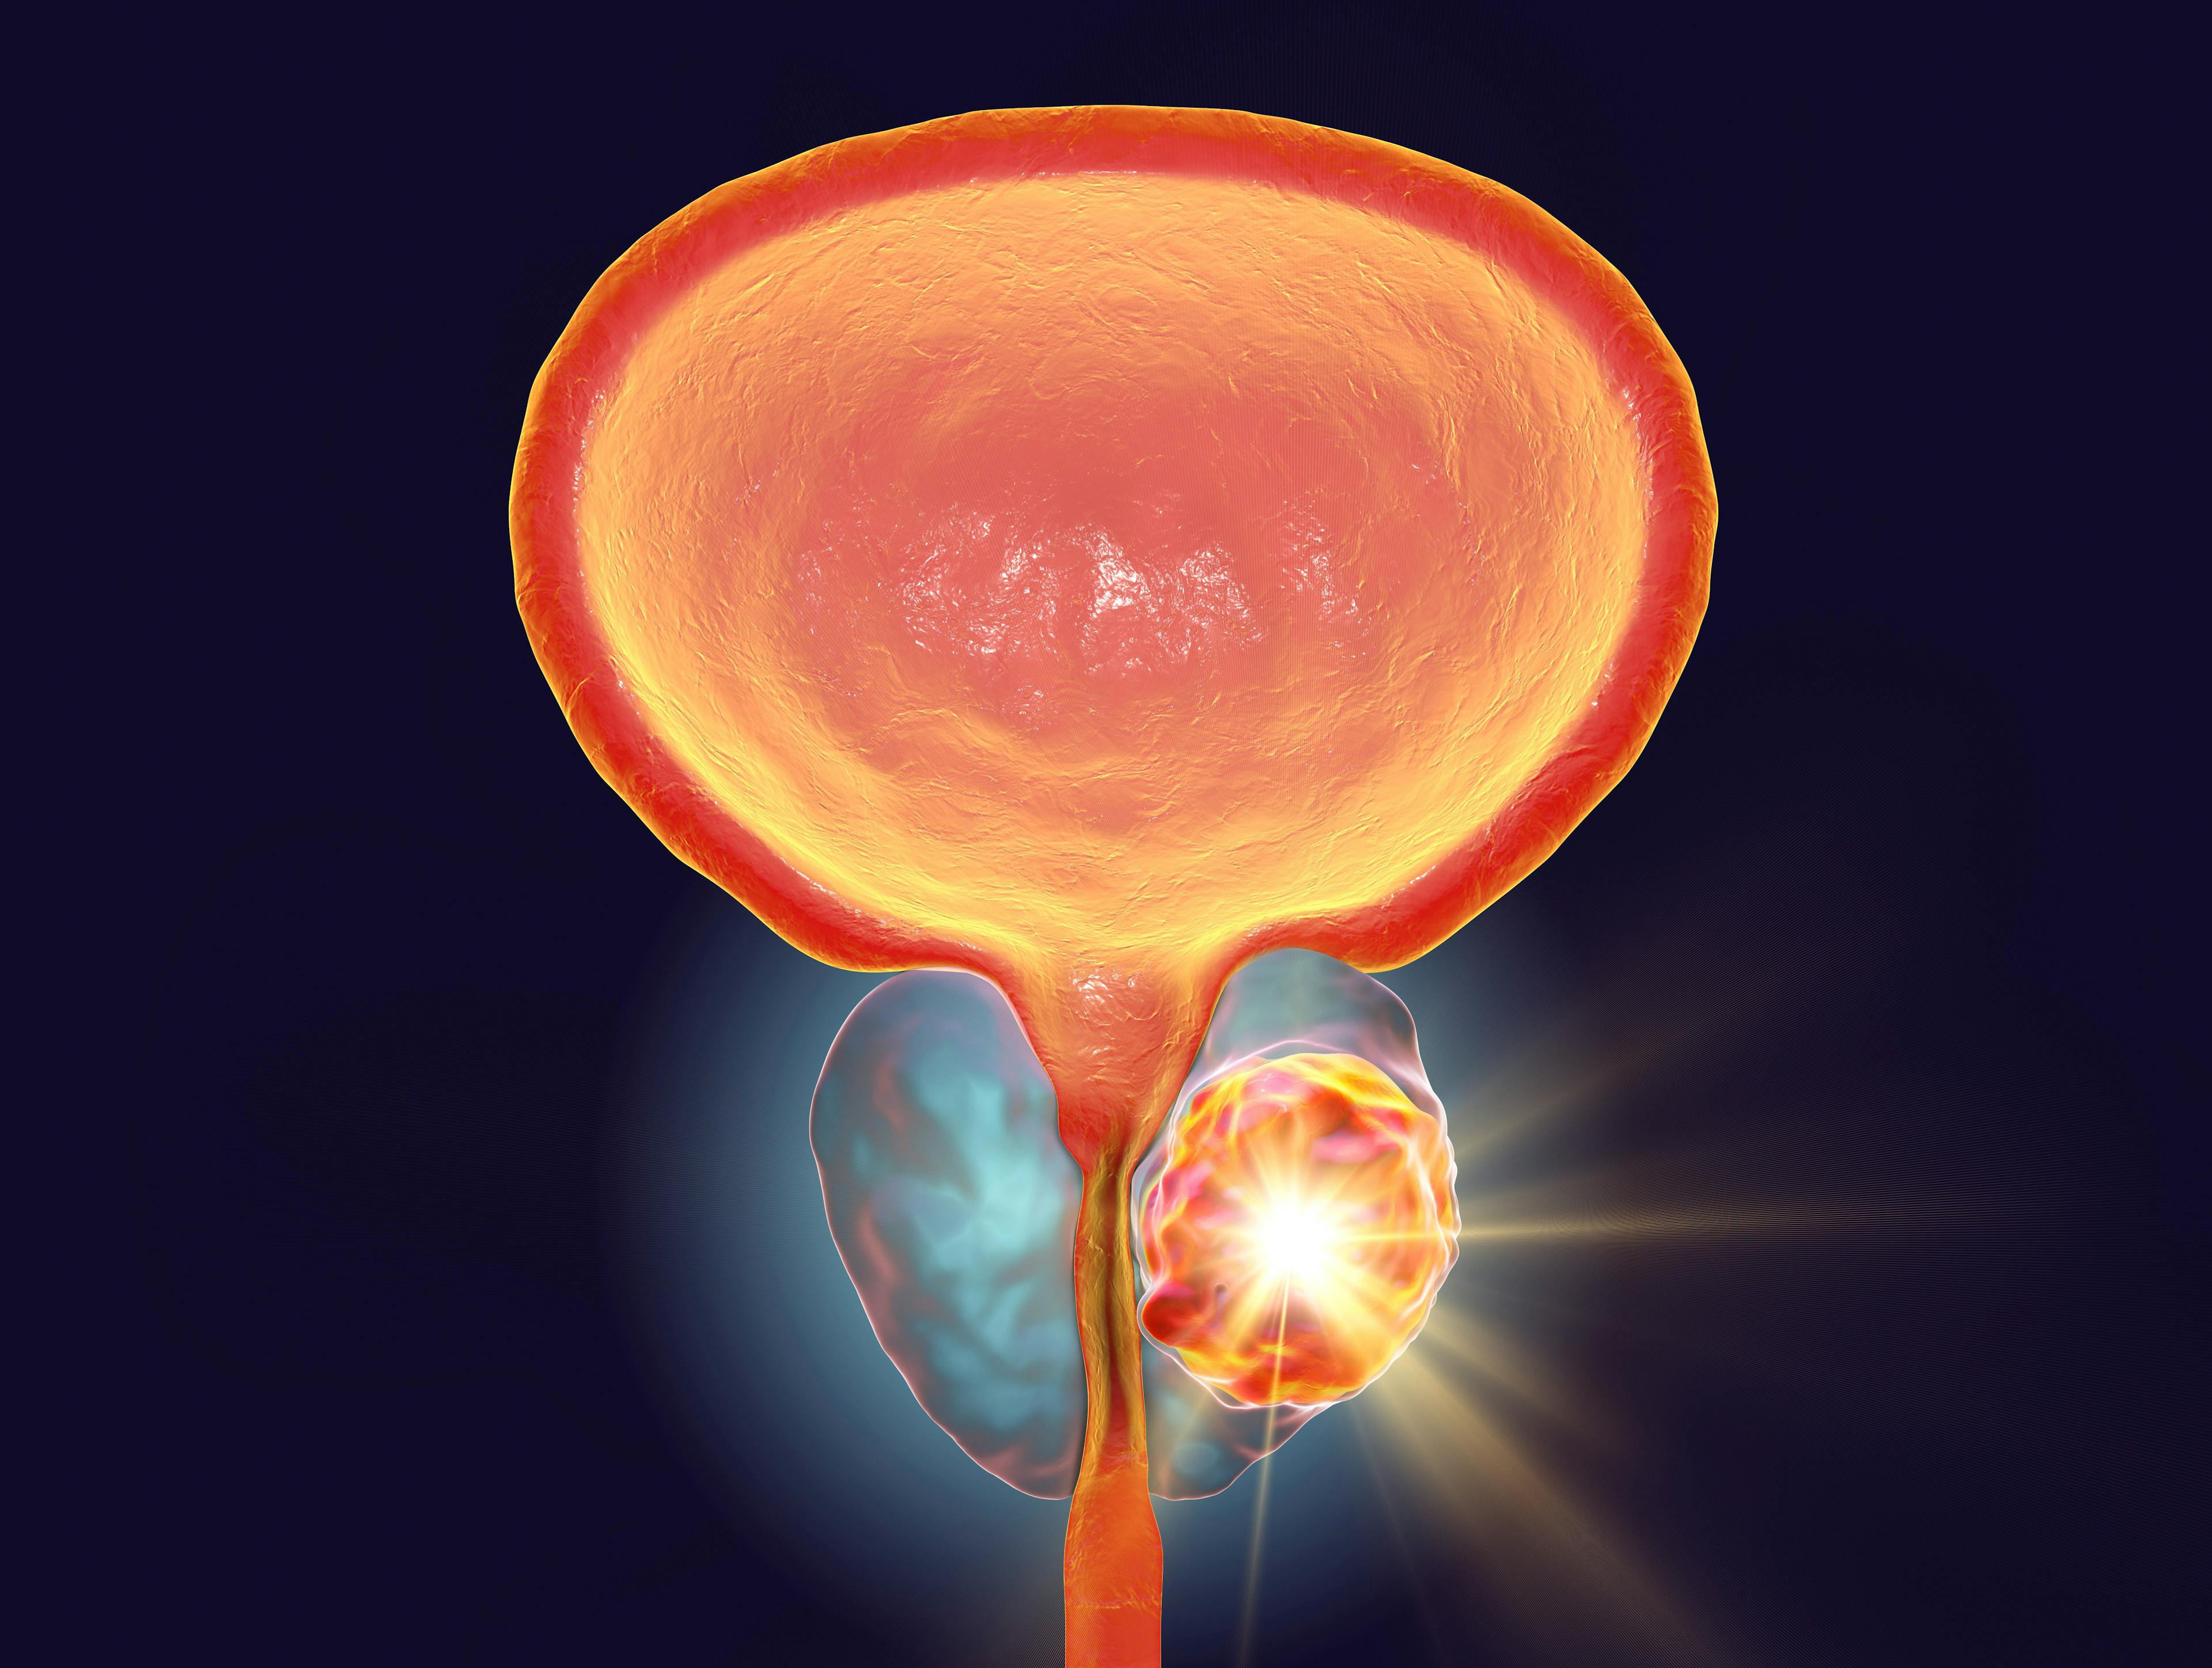 Prostate cancer illustration | Image credit: Dr_Microbe - stock.adobe.com